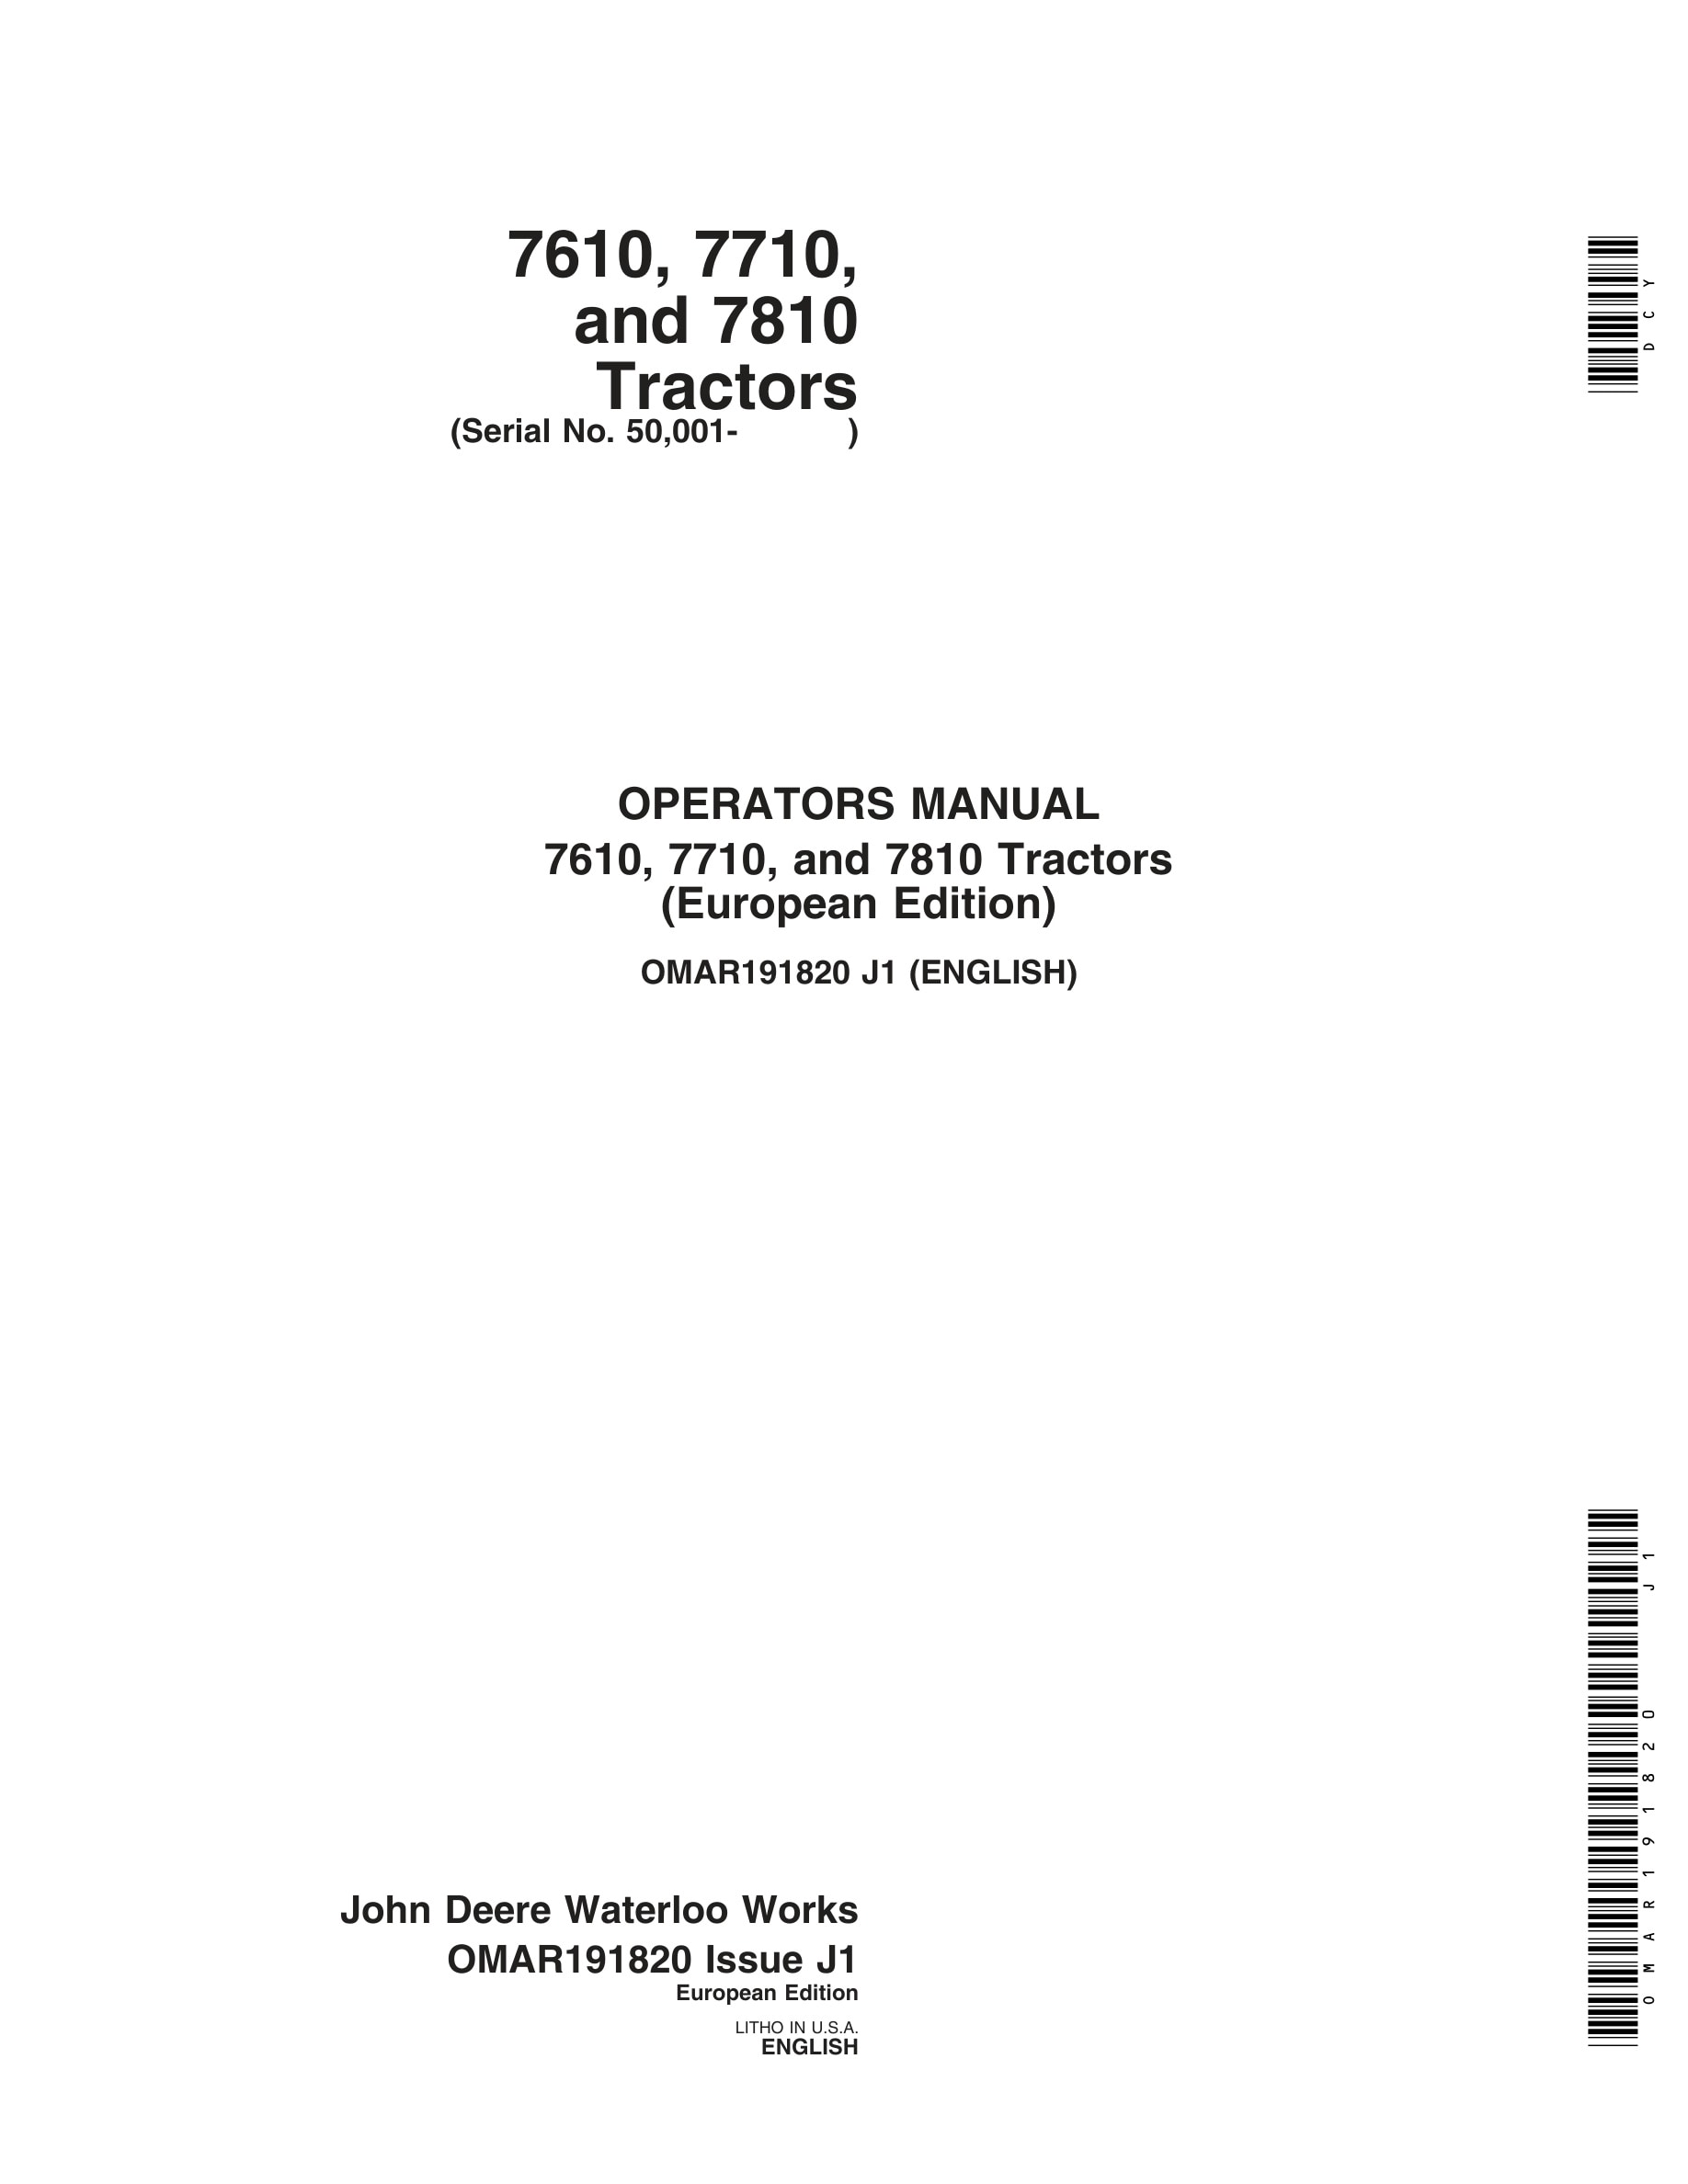 John Deere 7610, 7710, And 7810 Tractors Operator Manuals OMAR191820-1